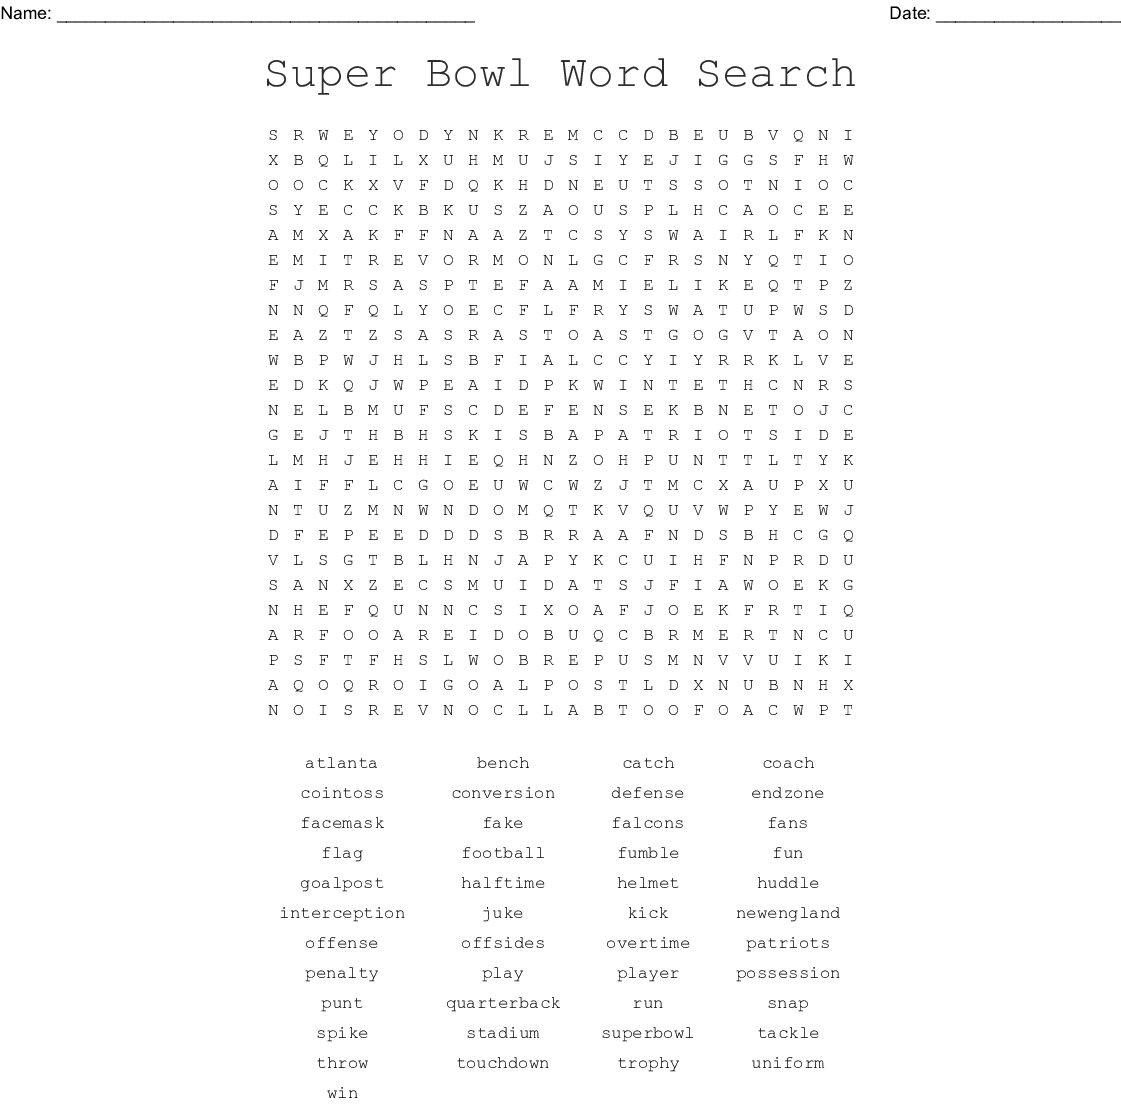 Super Bowl 52 Word Search - Wordmint